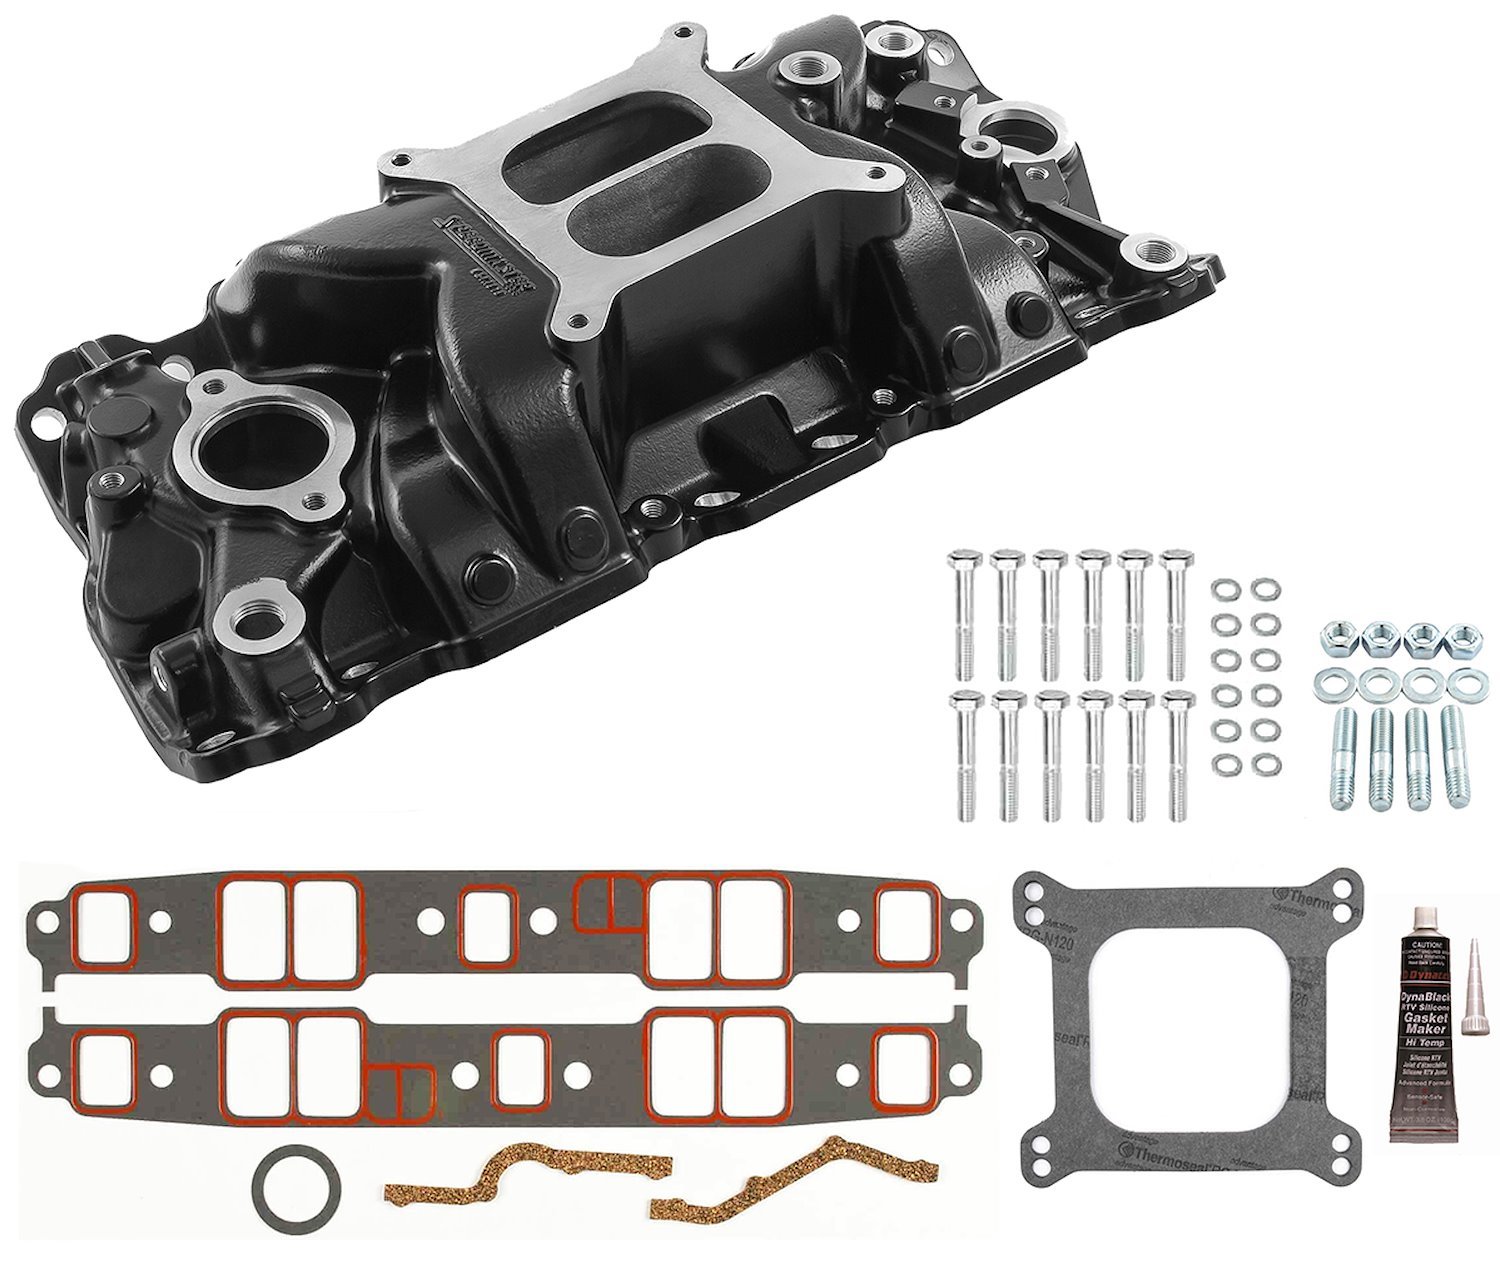 MidRise Air Intake Manifold Kit Small Block Chevy 350 - Black Finish